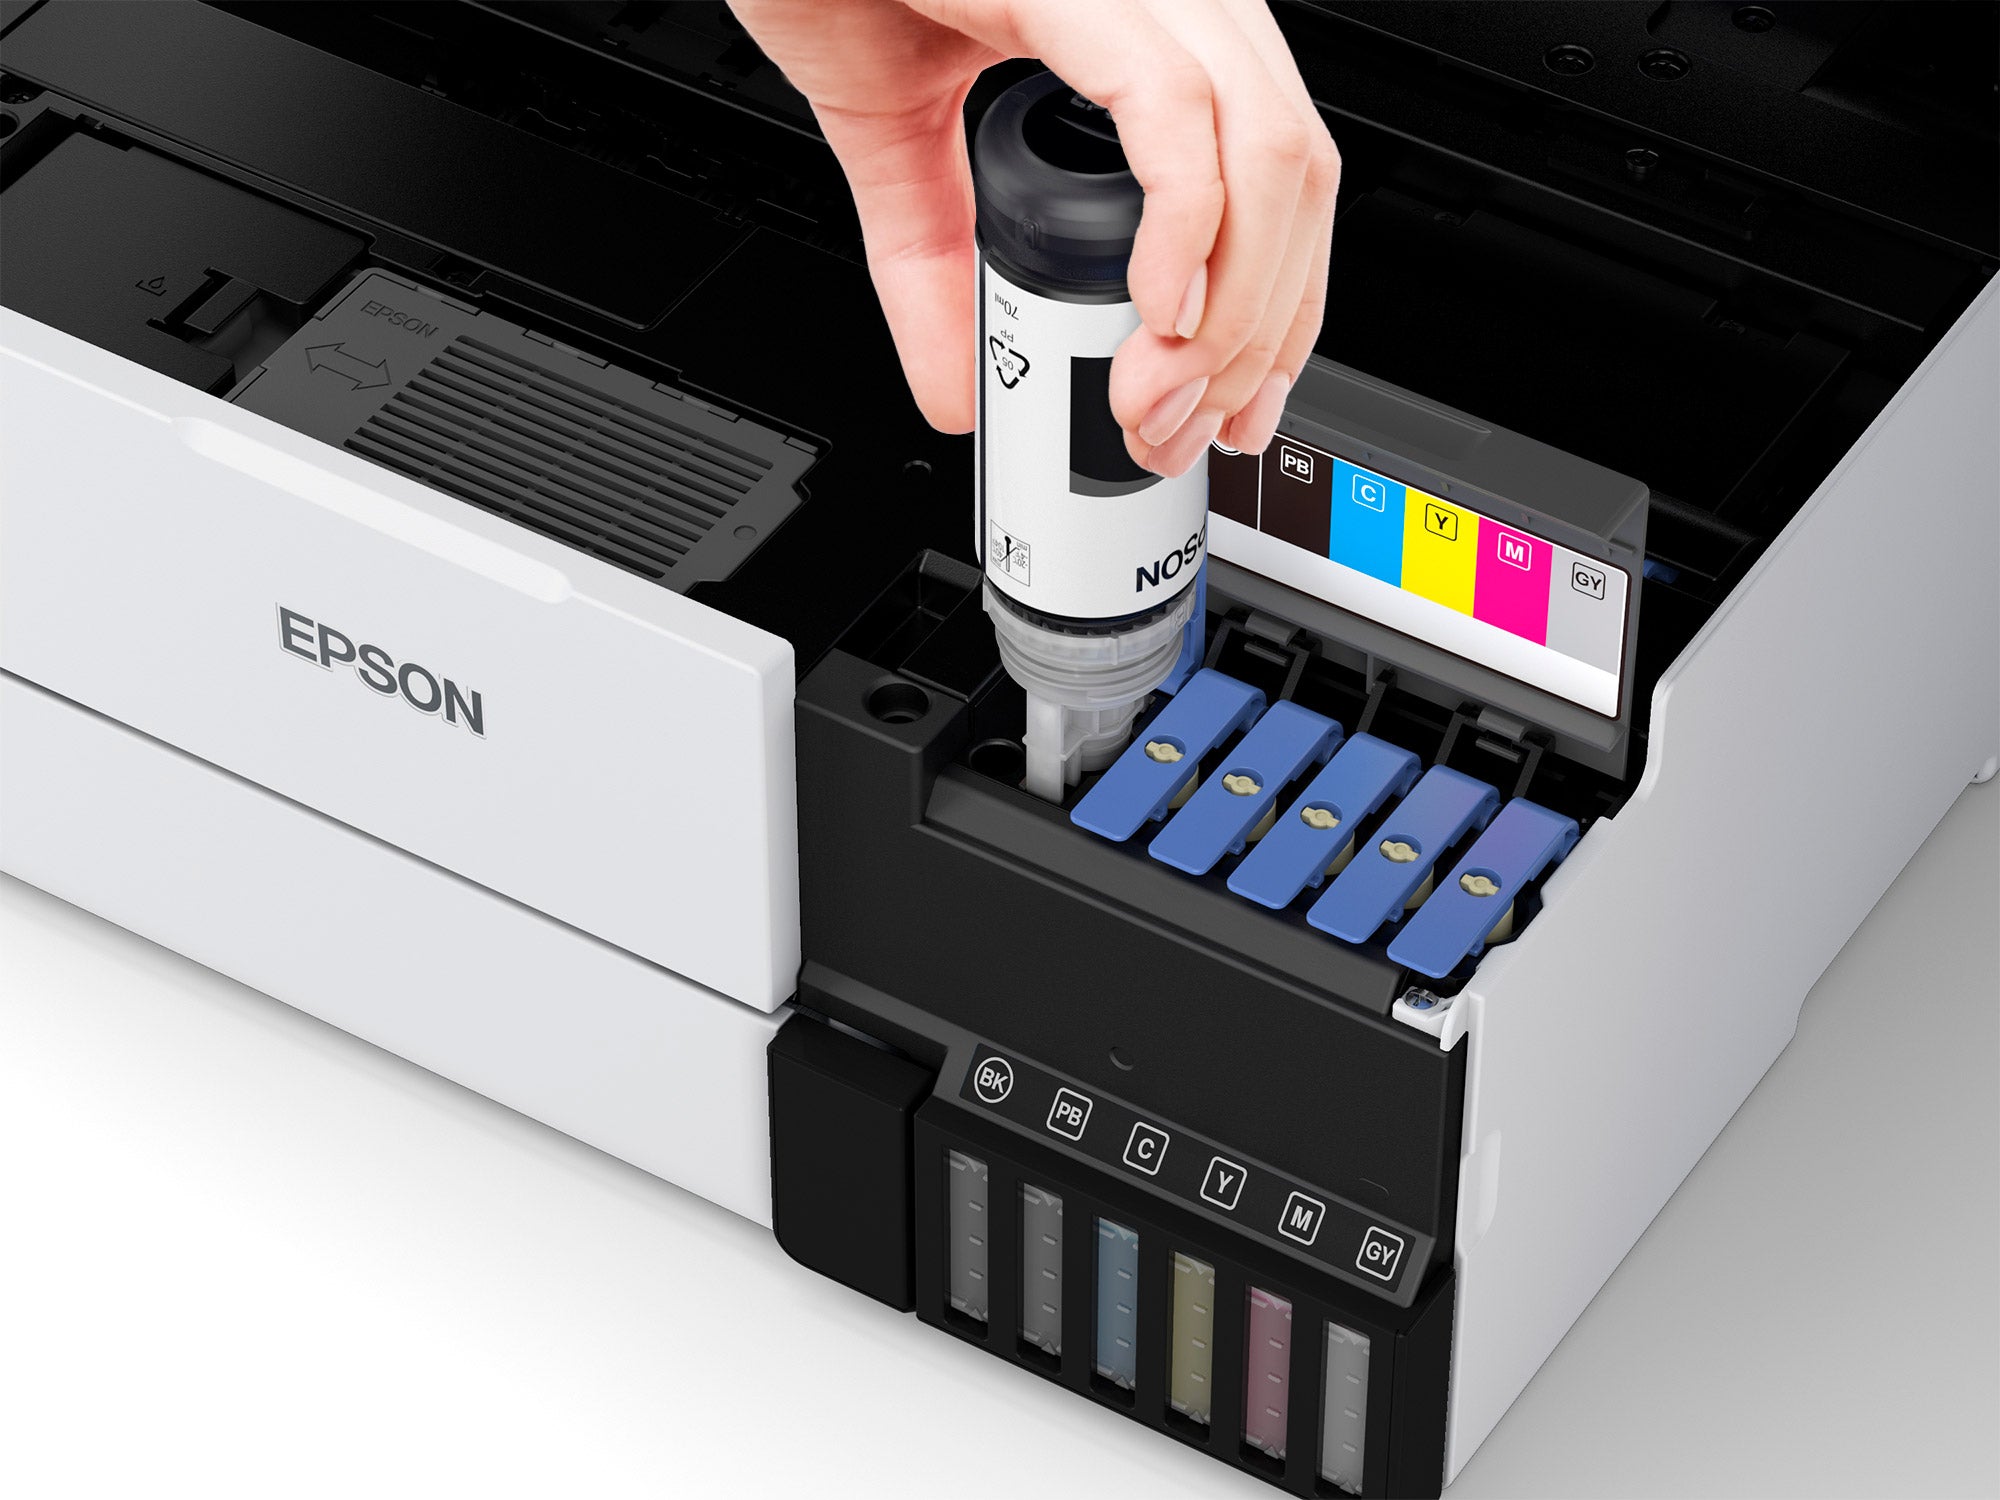 Printer Epson L8160 (C11CJ20404)